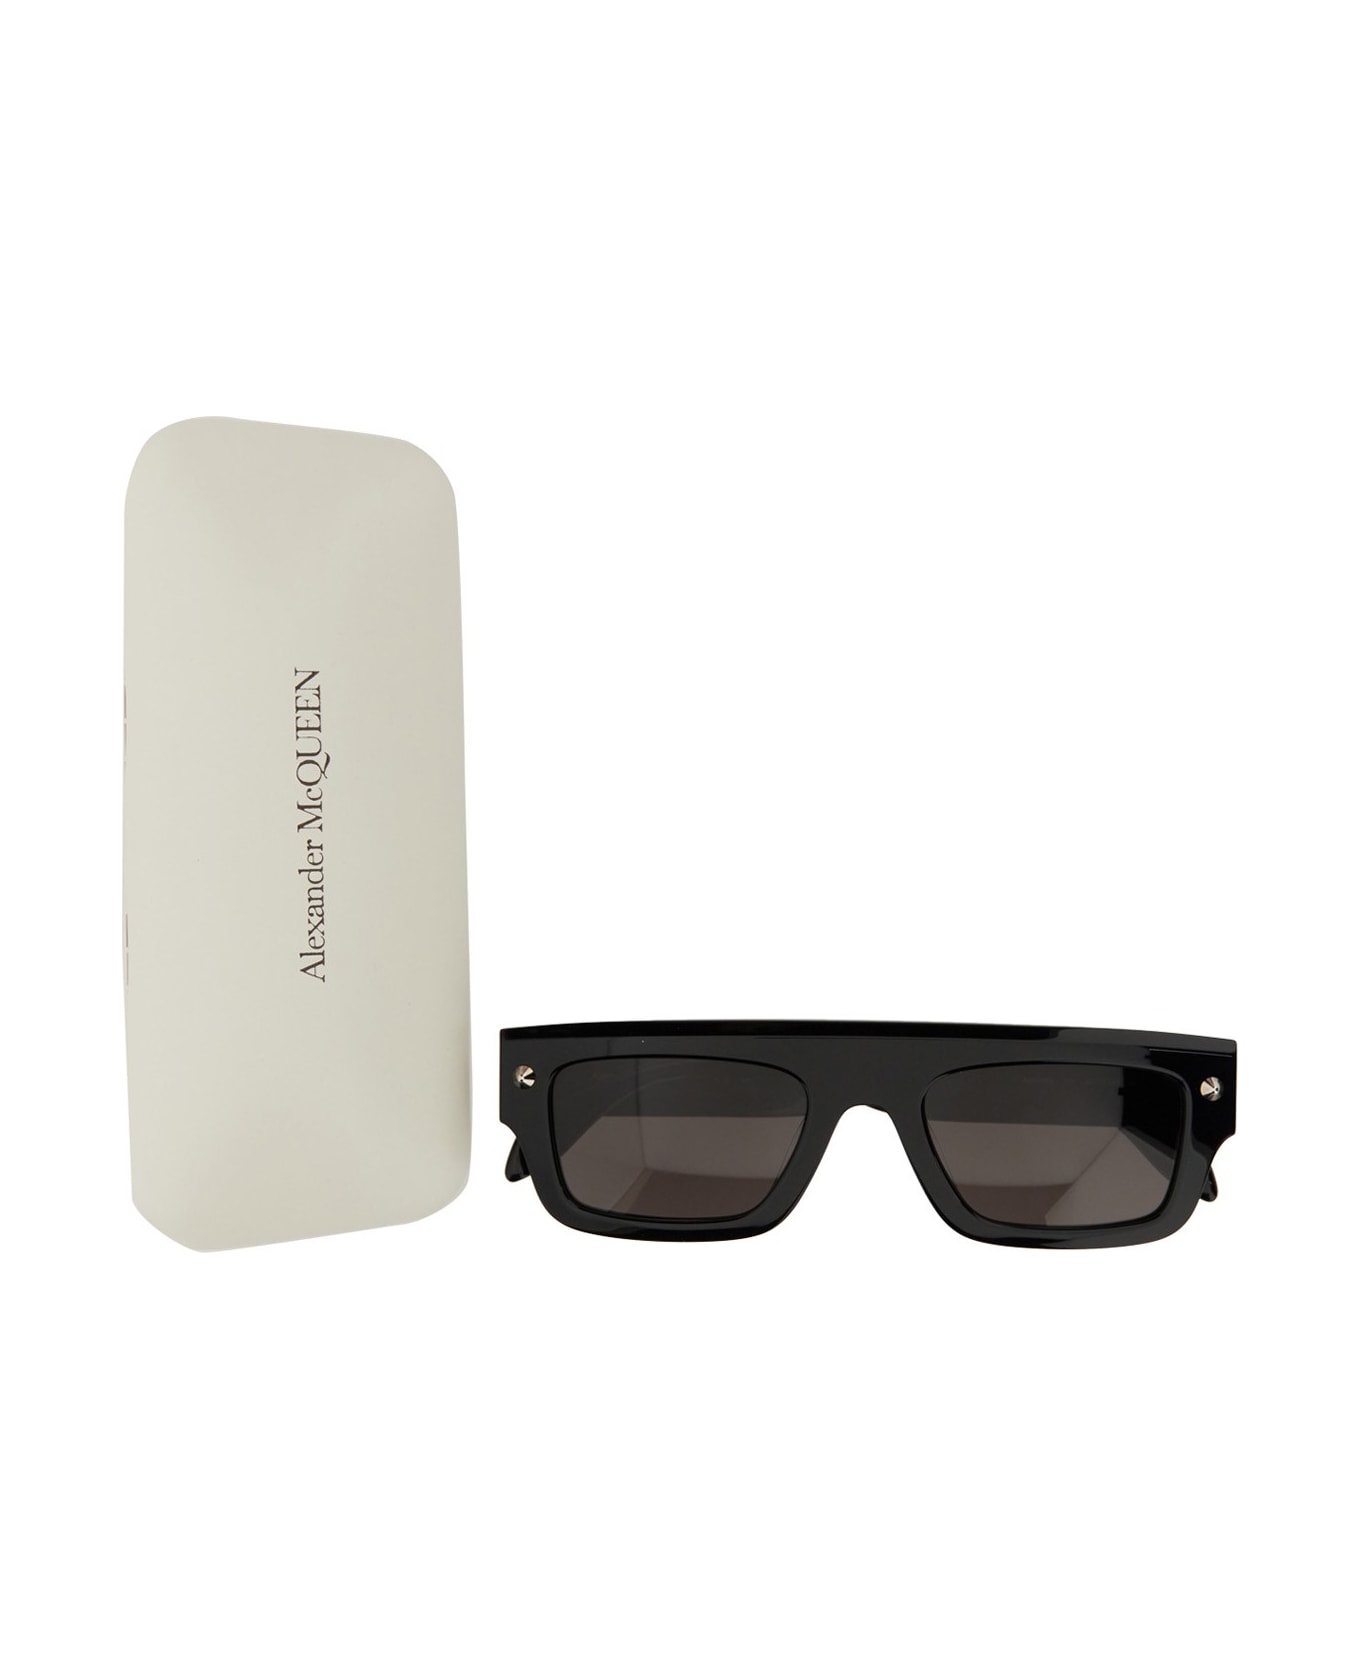 Alexander McQueen Eyewear Logo Sunglasses - Black